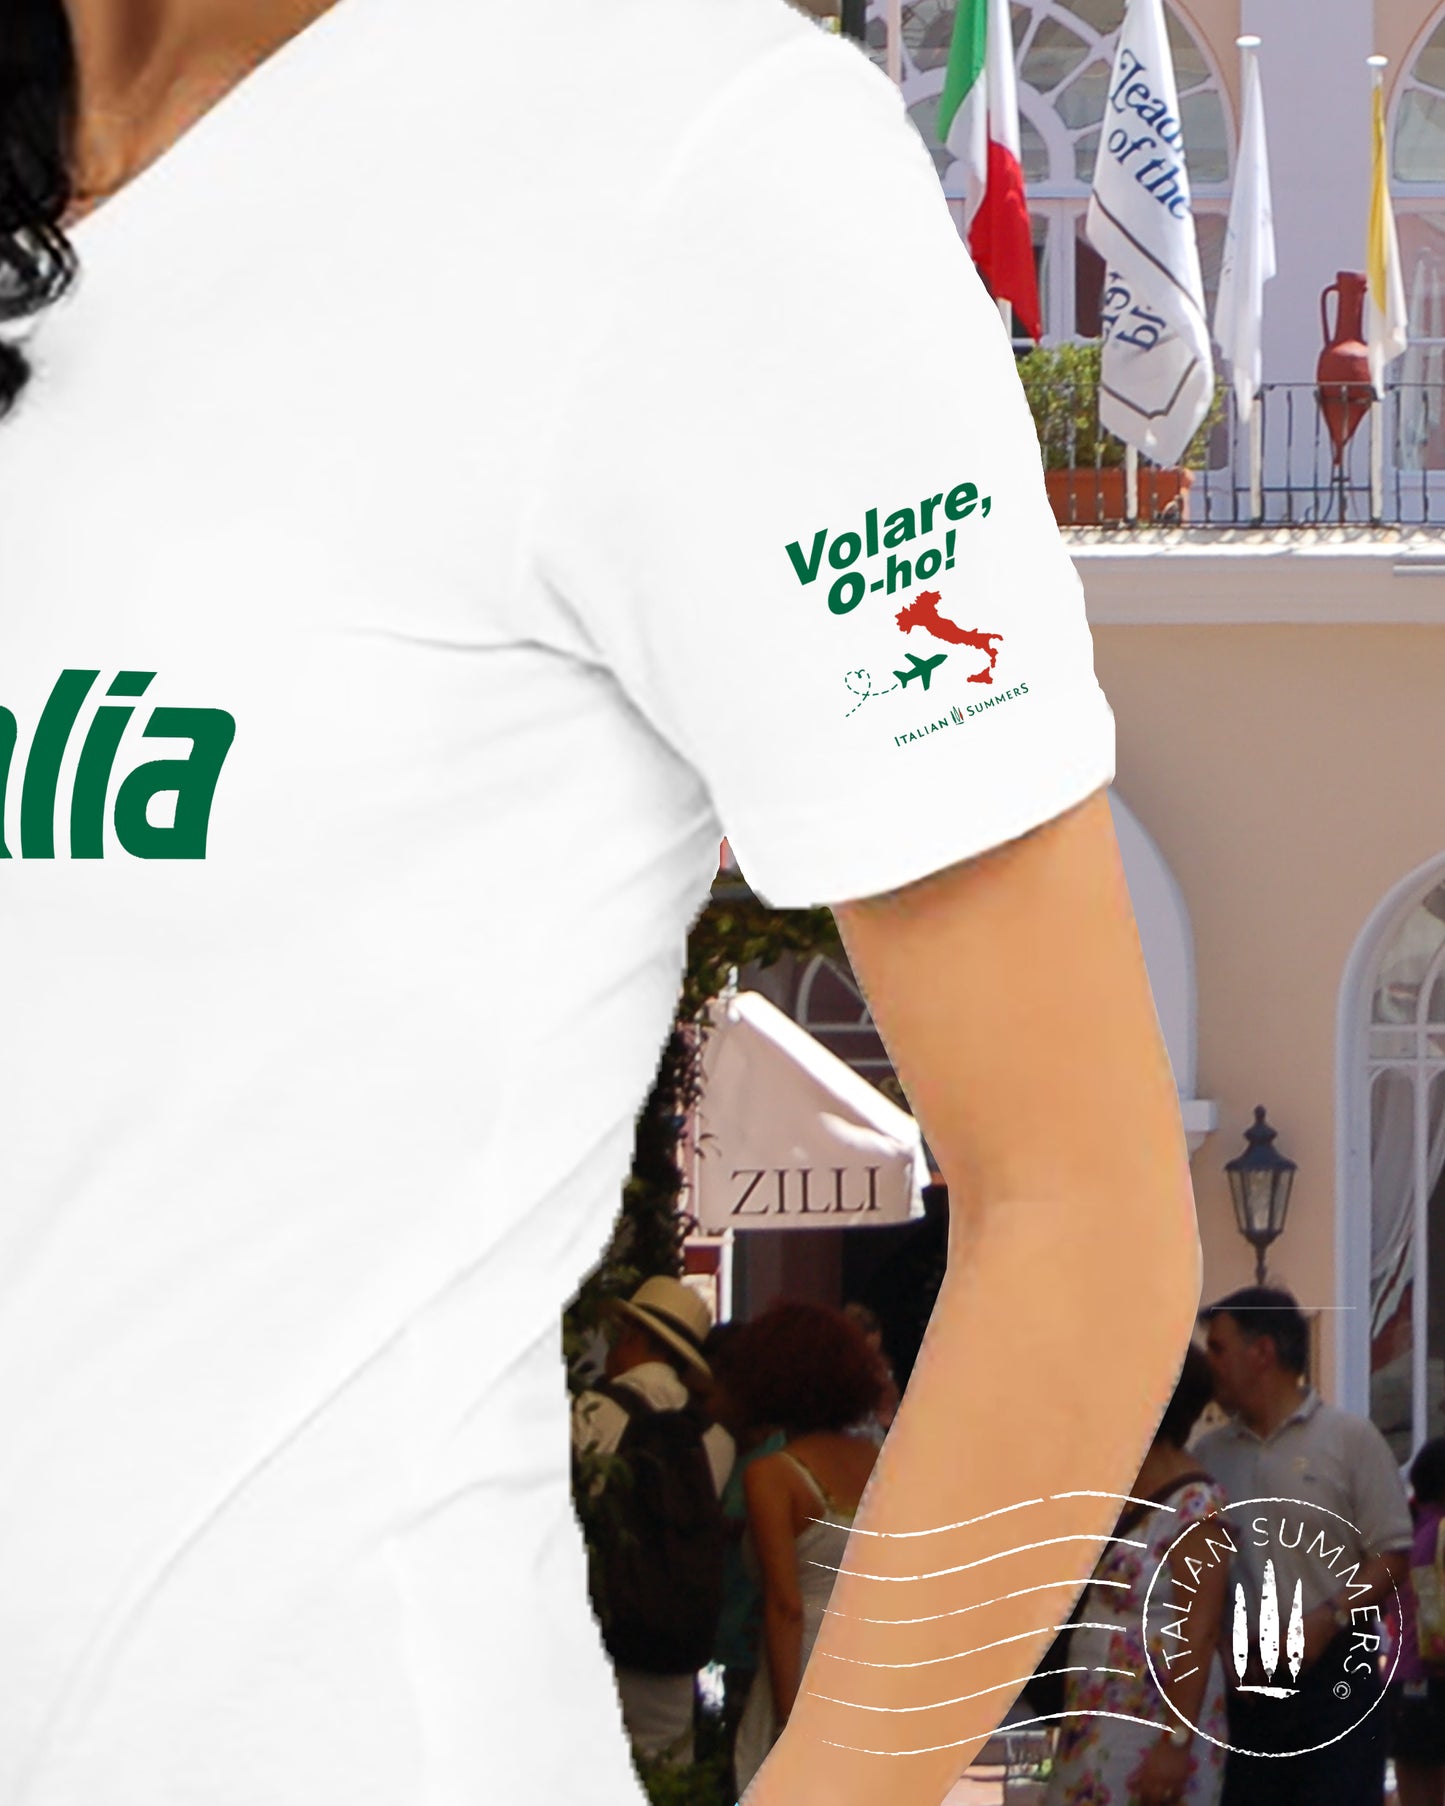 T shirt AIR ITALIA, Italy traveler, Italian voyage, Italy retro airline design, Volare, o-ho! buon viaggio!